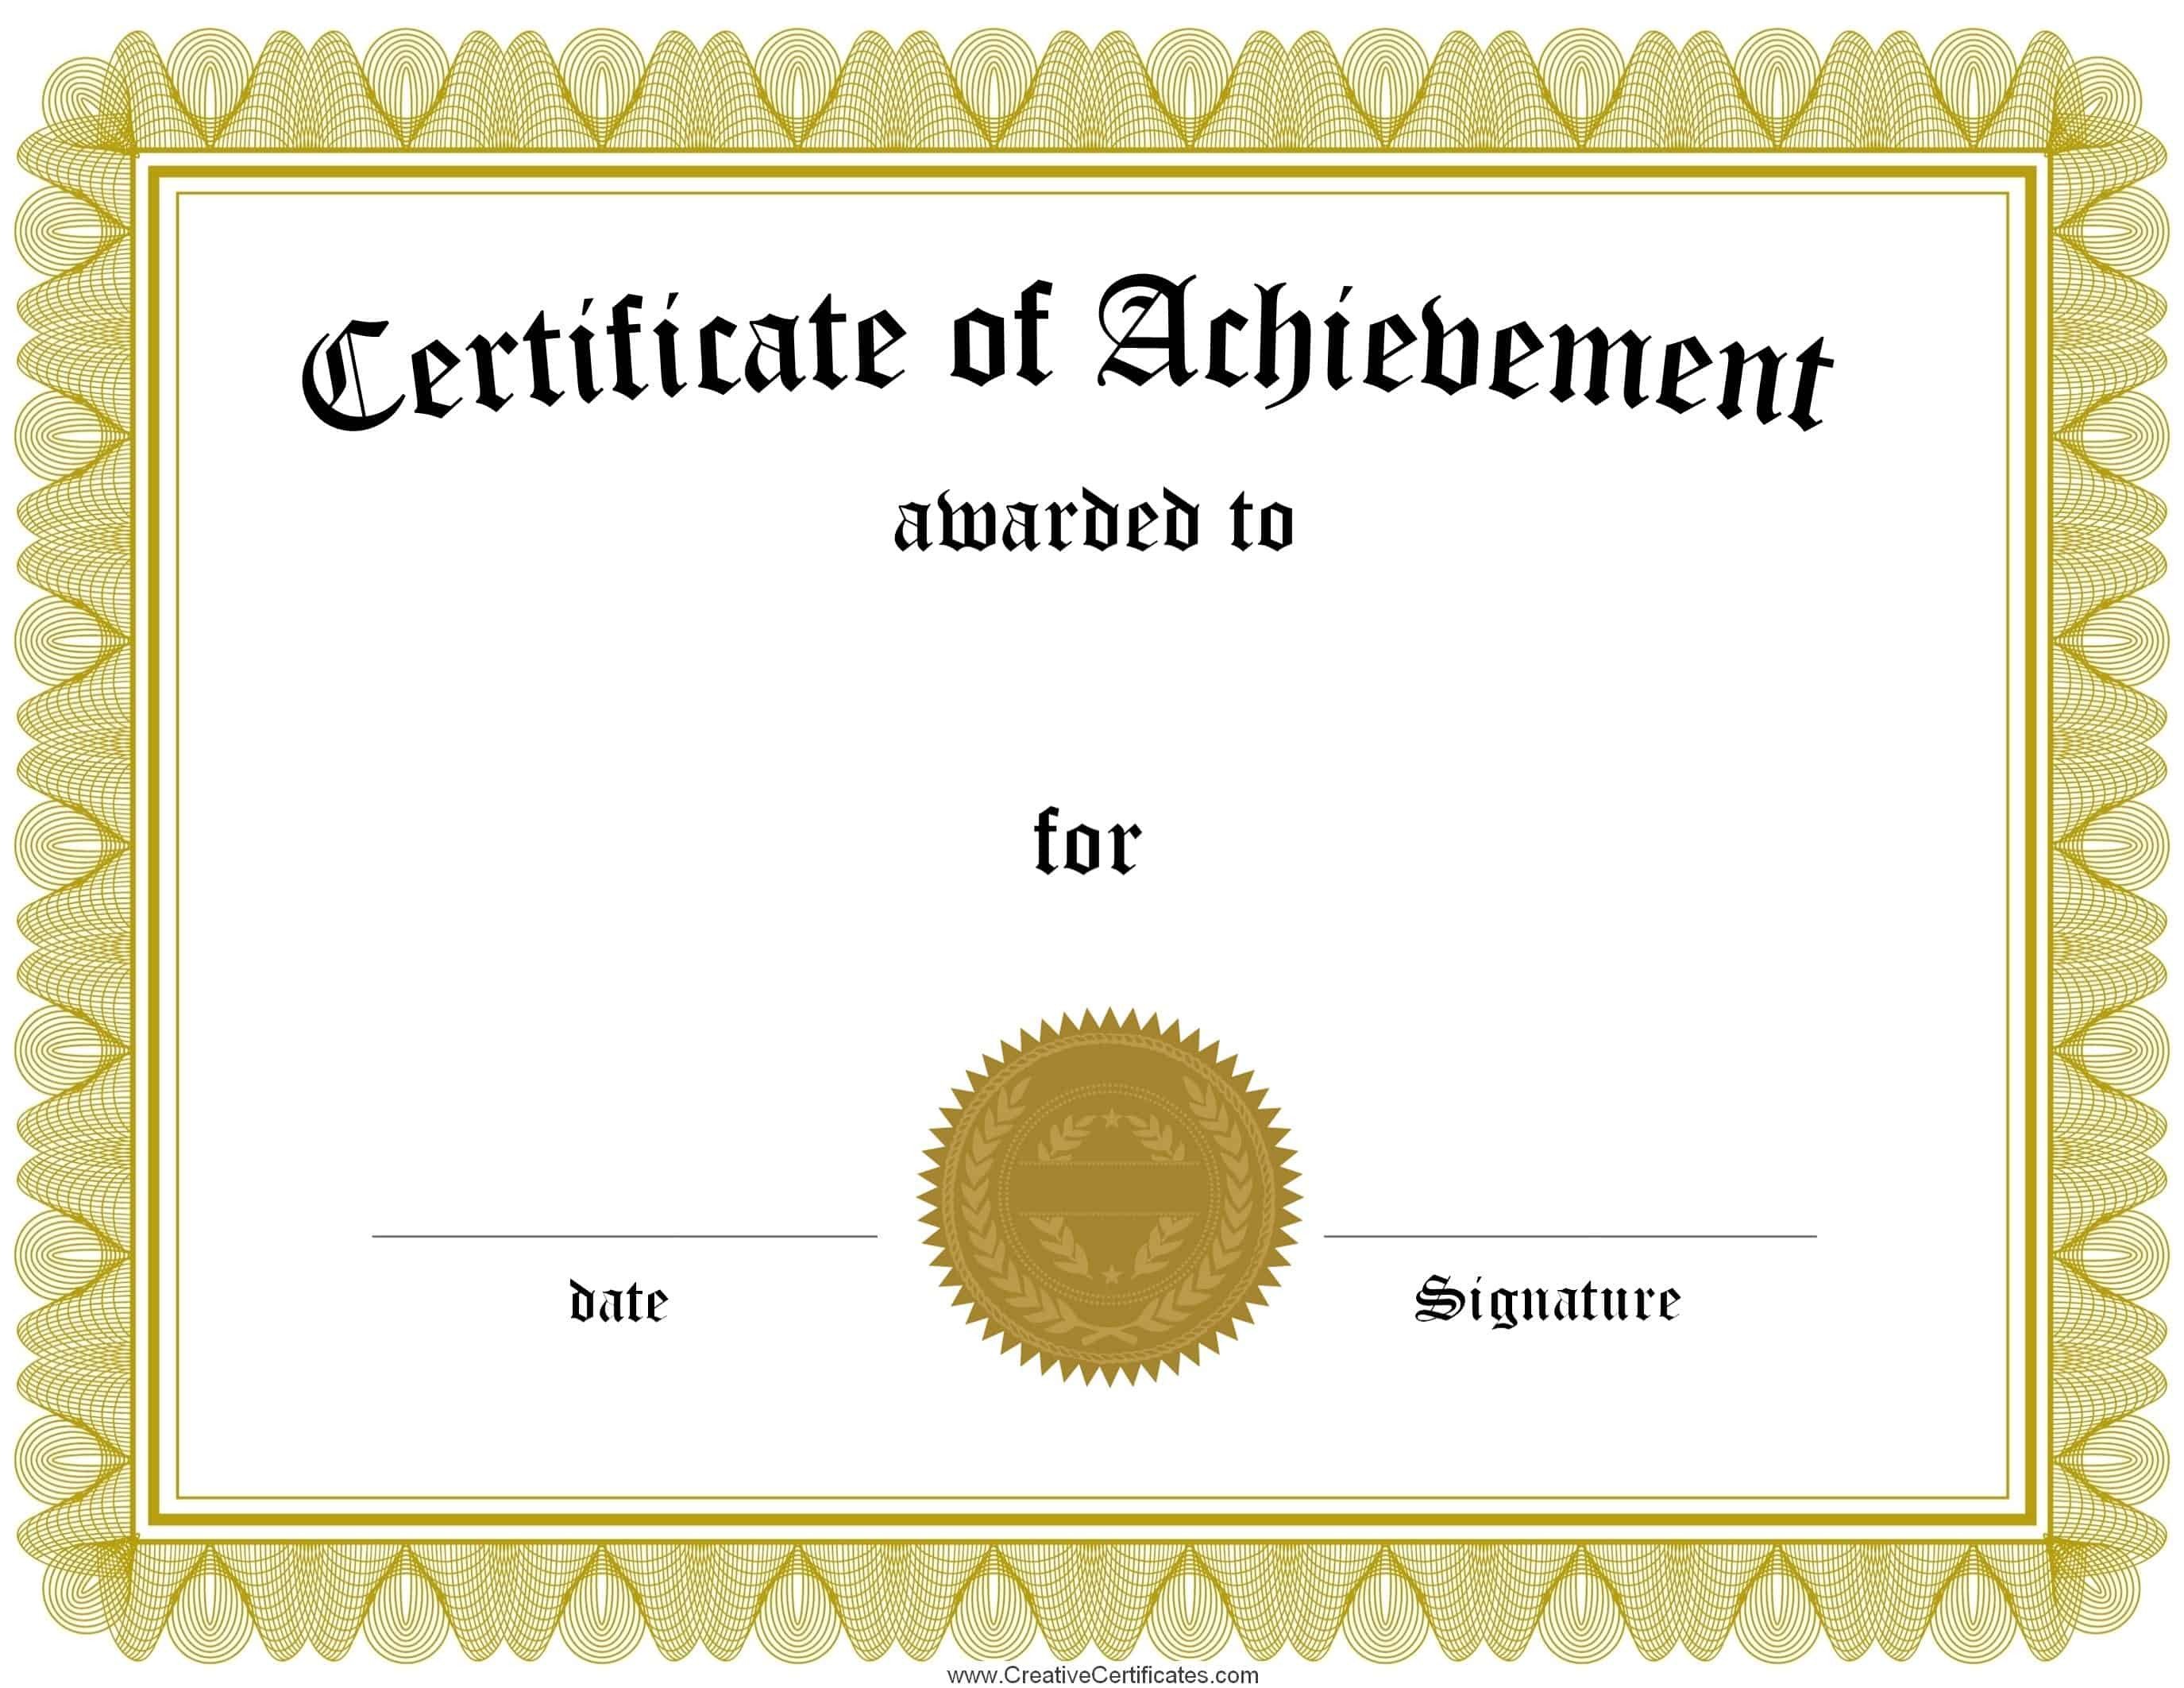 Certificate Of Achievement Template Free Customizable Certificate Of Achievement